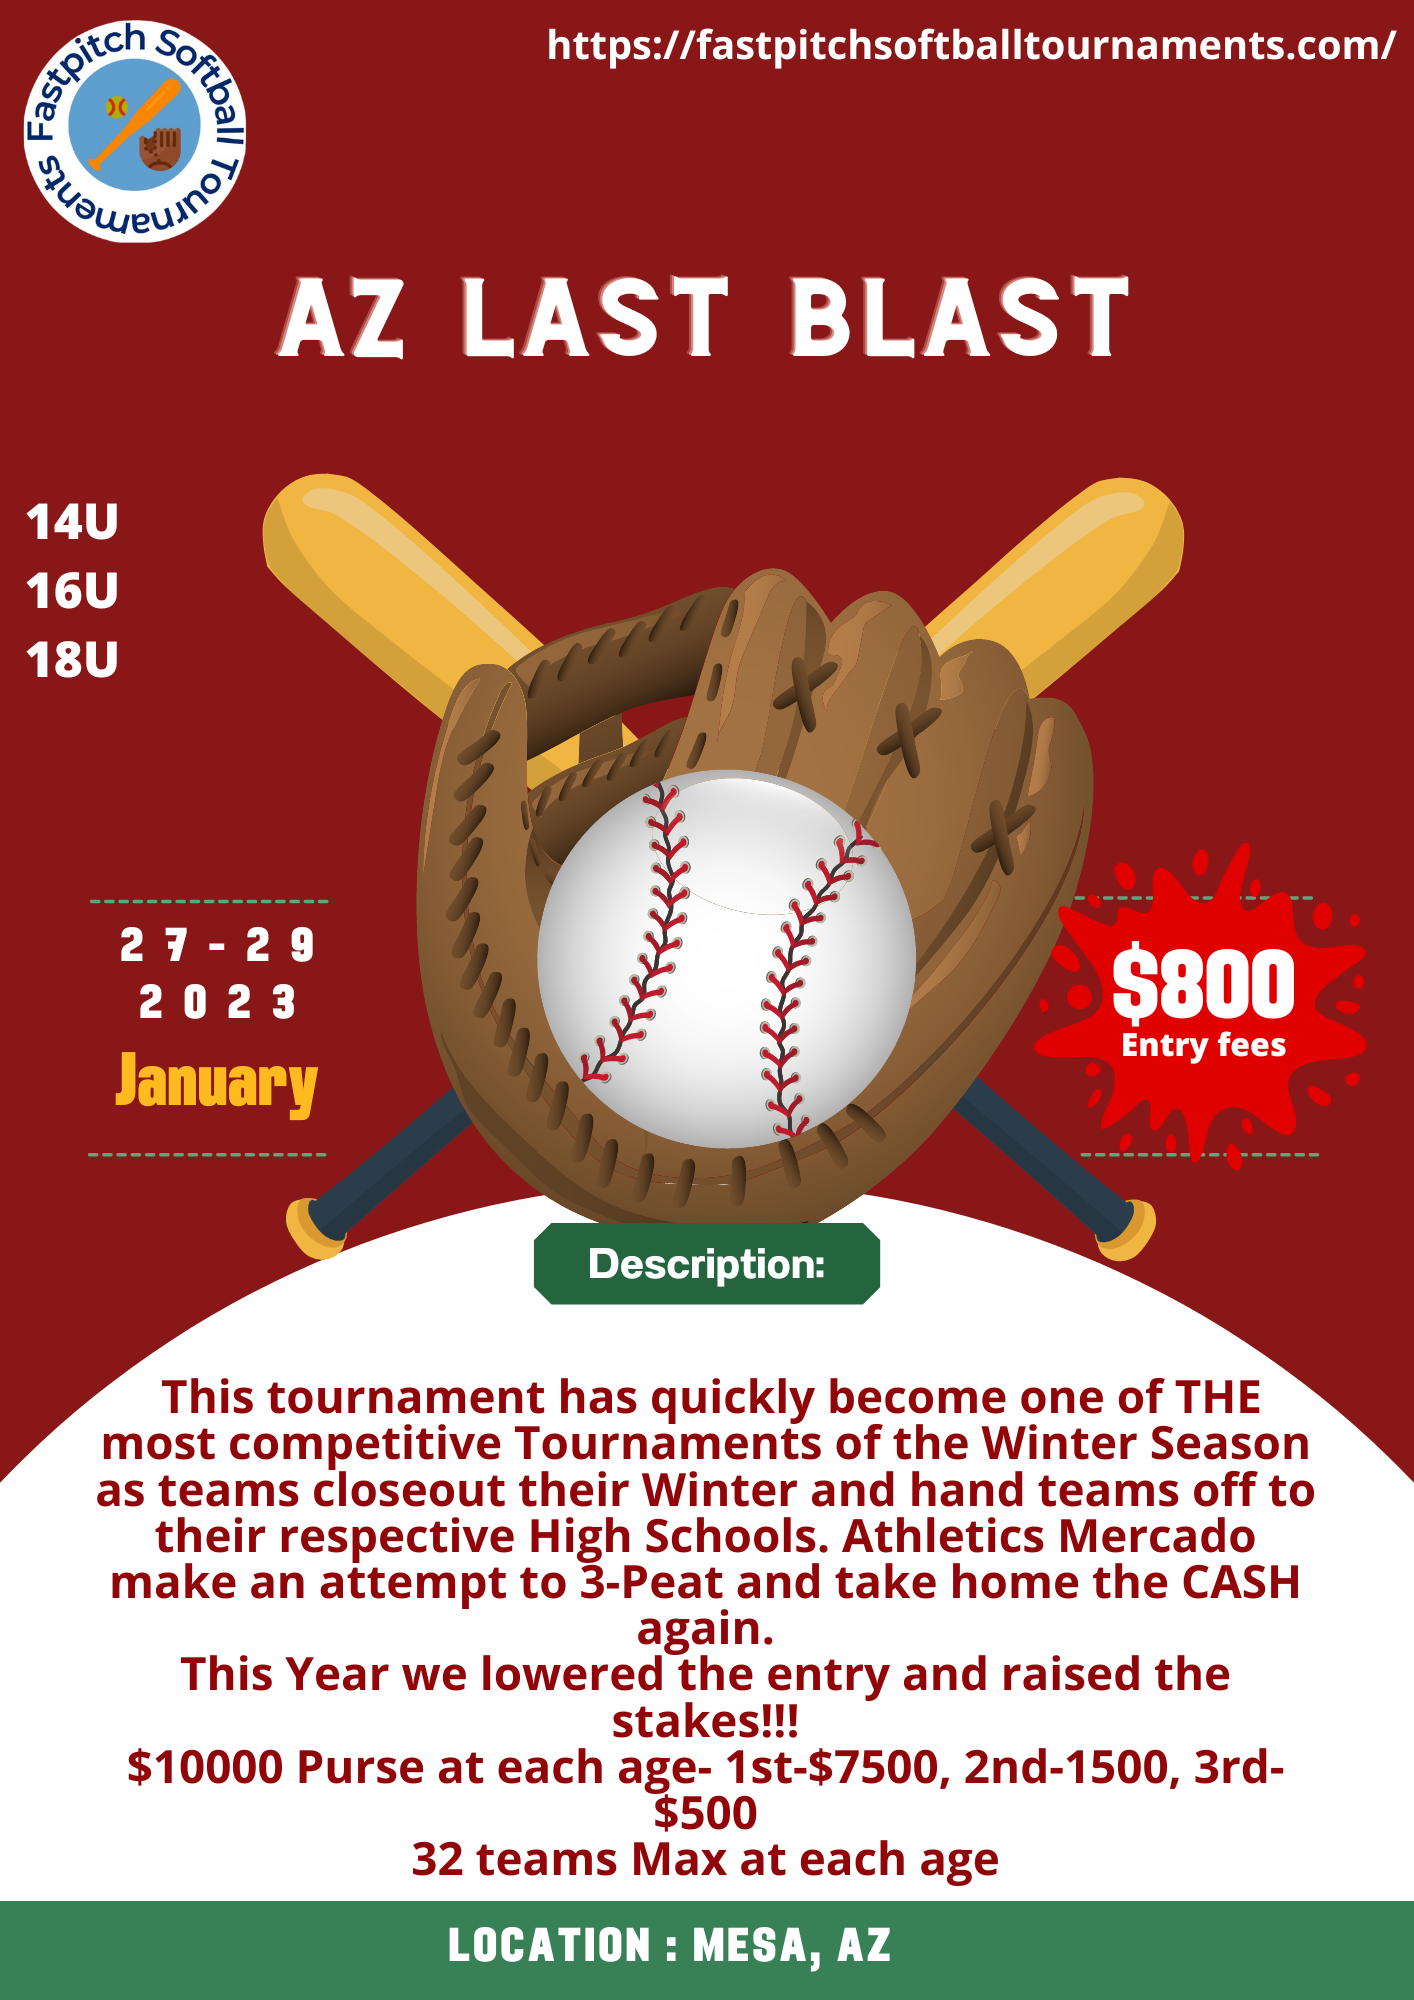 AZ LAST BLAST Softball tournament in Arizona